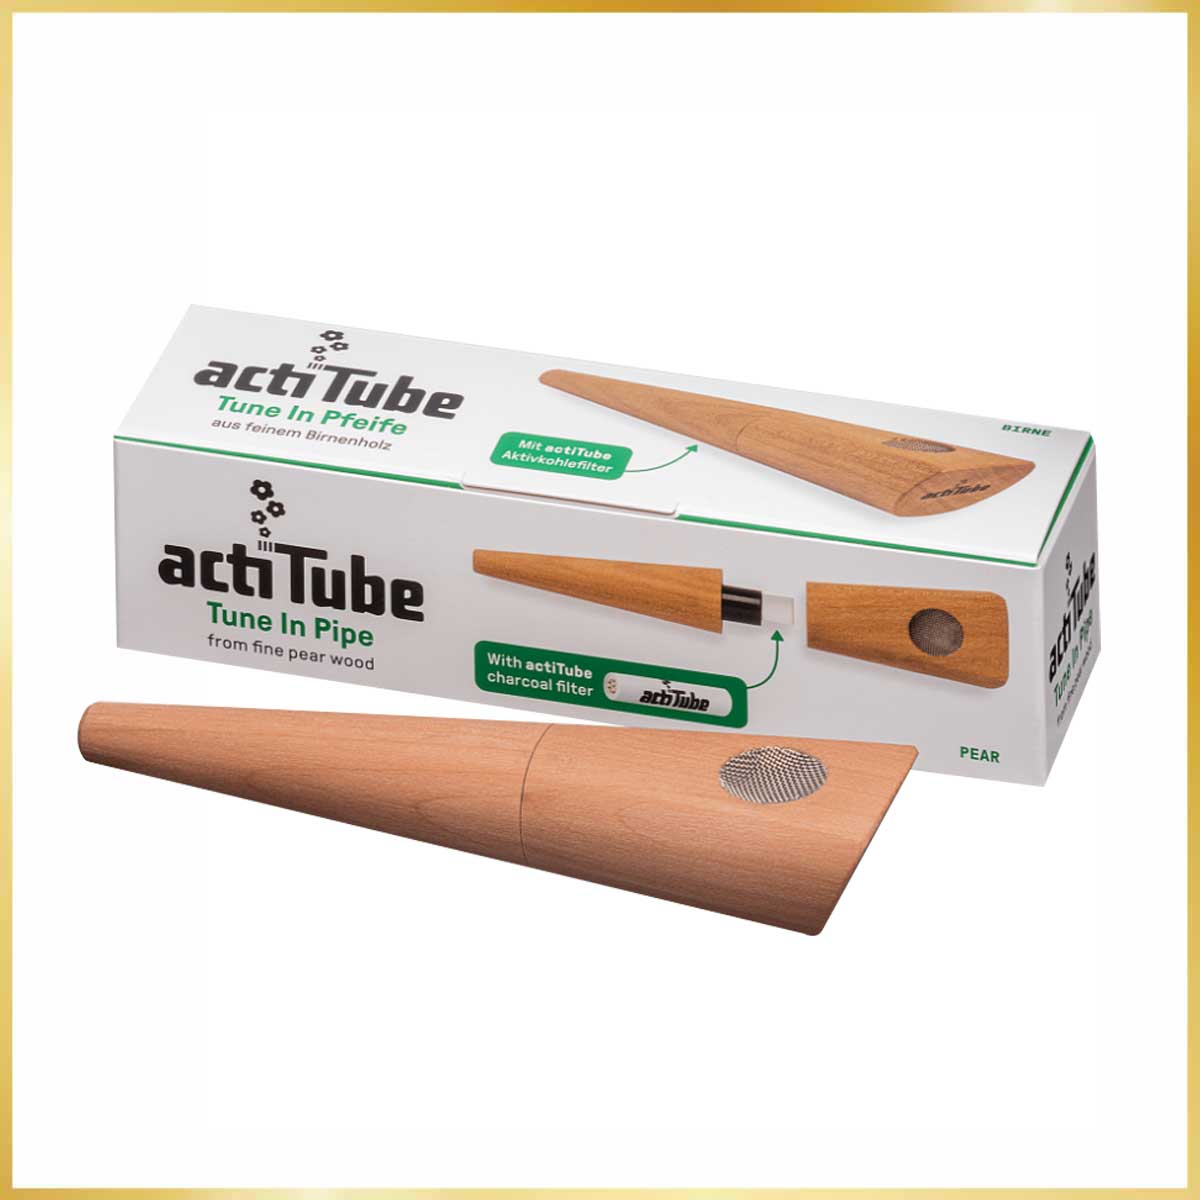 actitube-tune-in-pipe-fine-pear-wood-pipe-en-bois